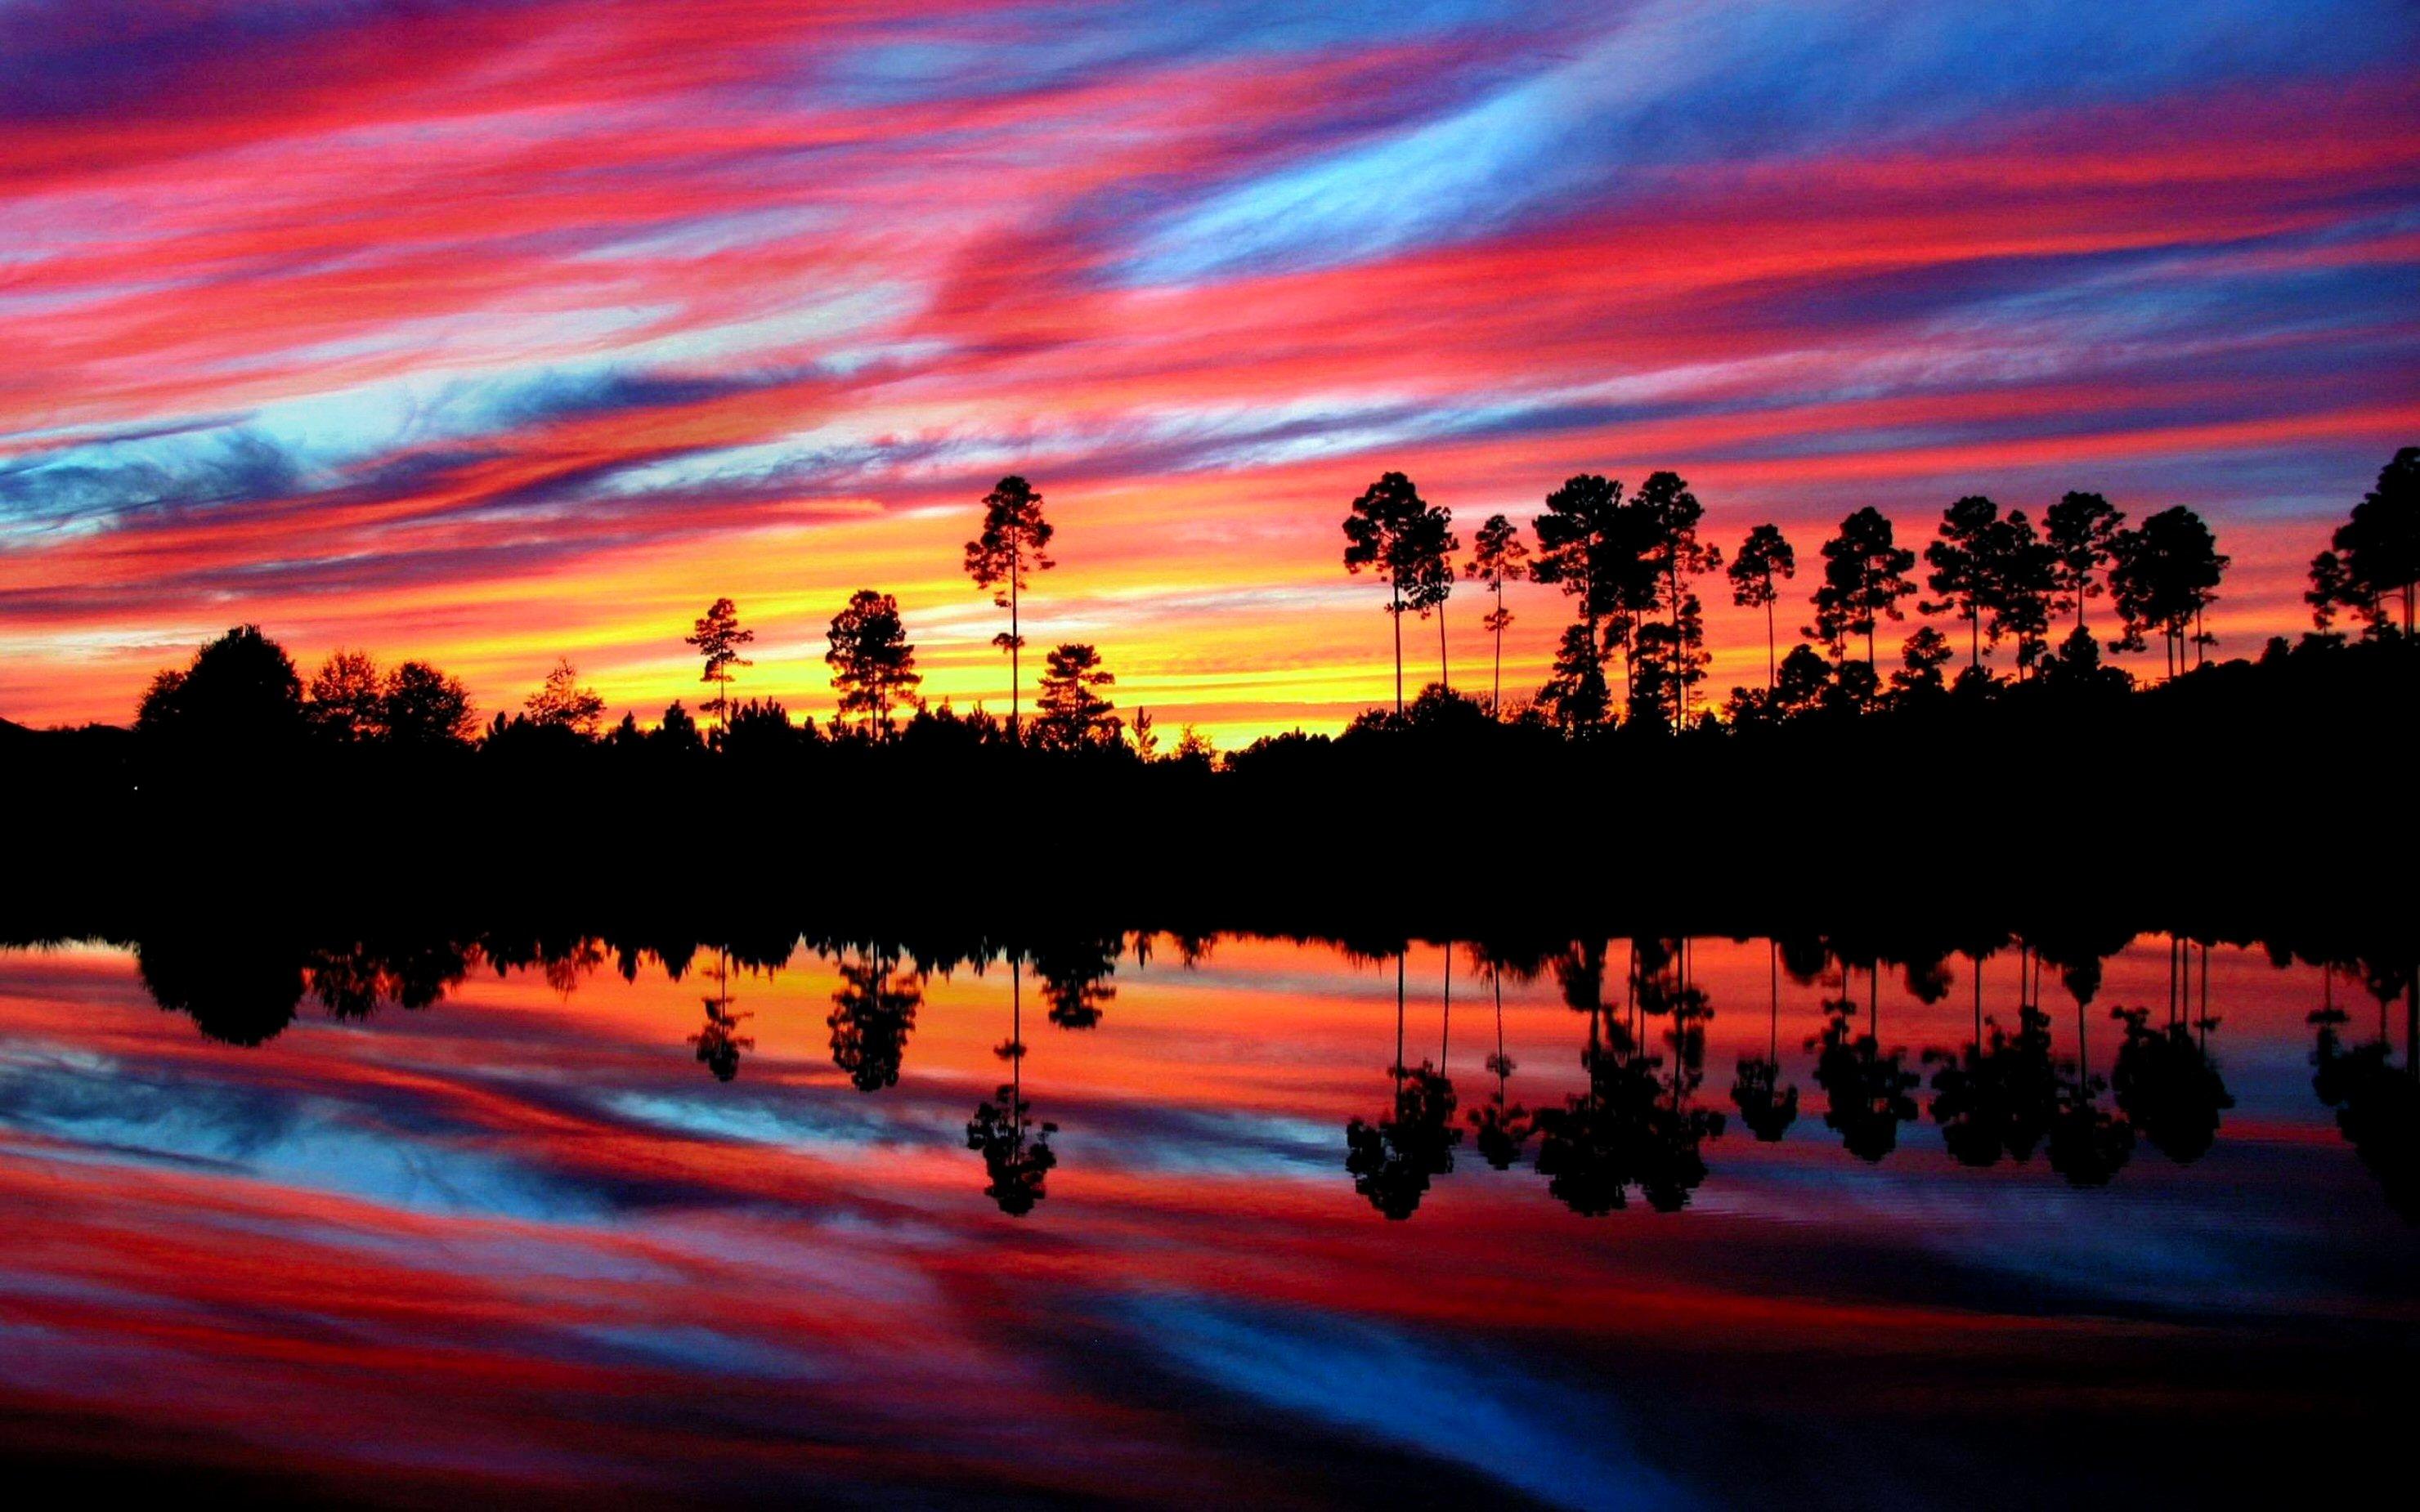 New Beautiful Sunset Wallpaper Photo To Download Wallpaper